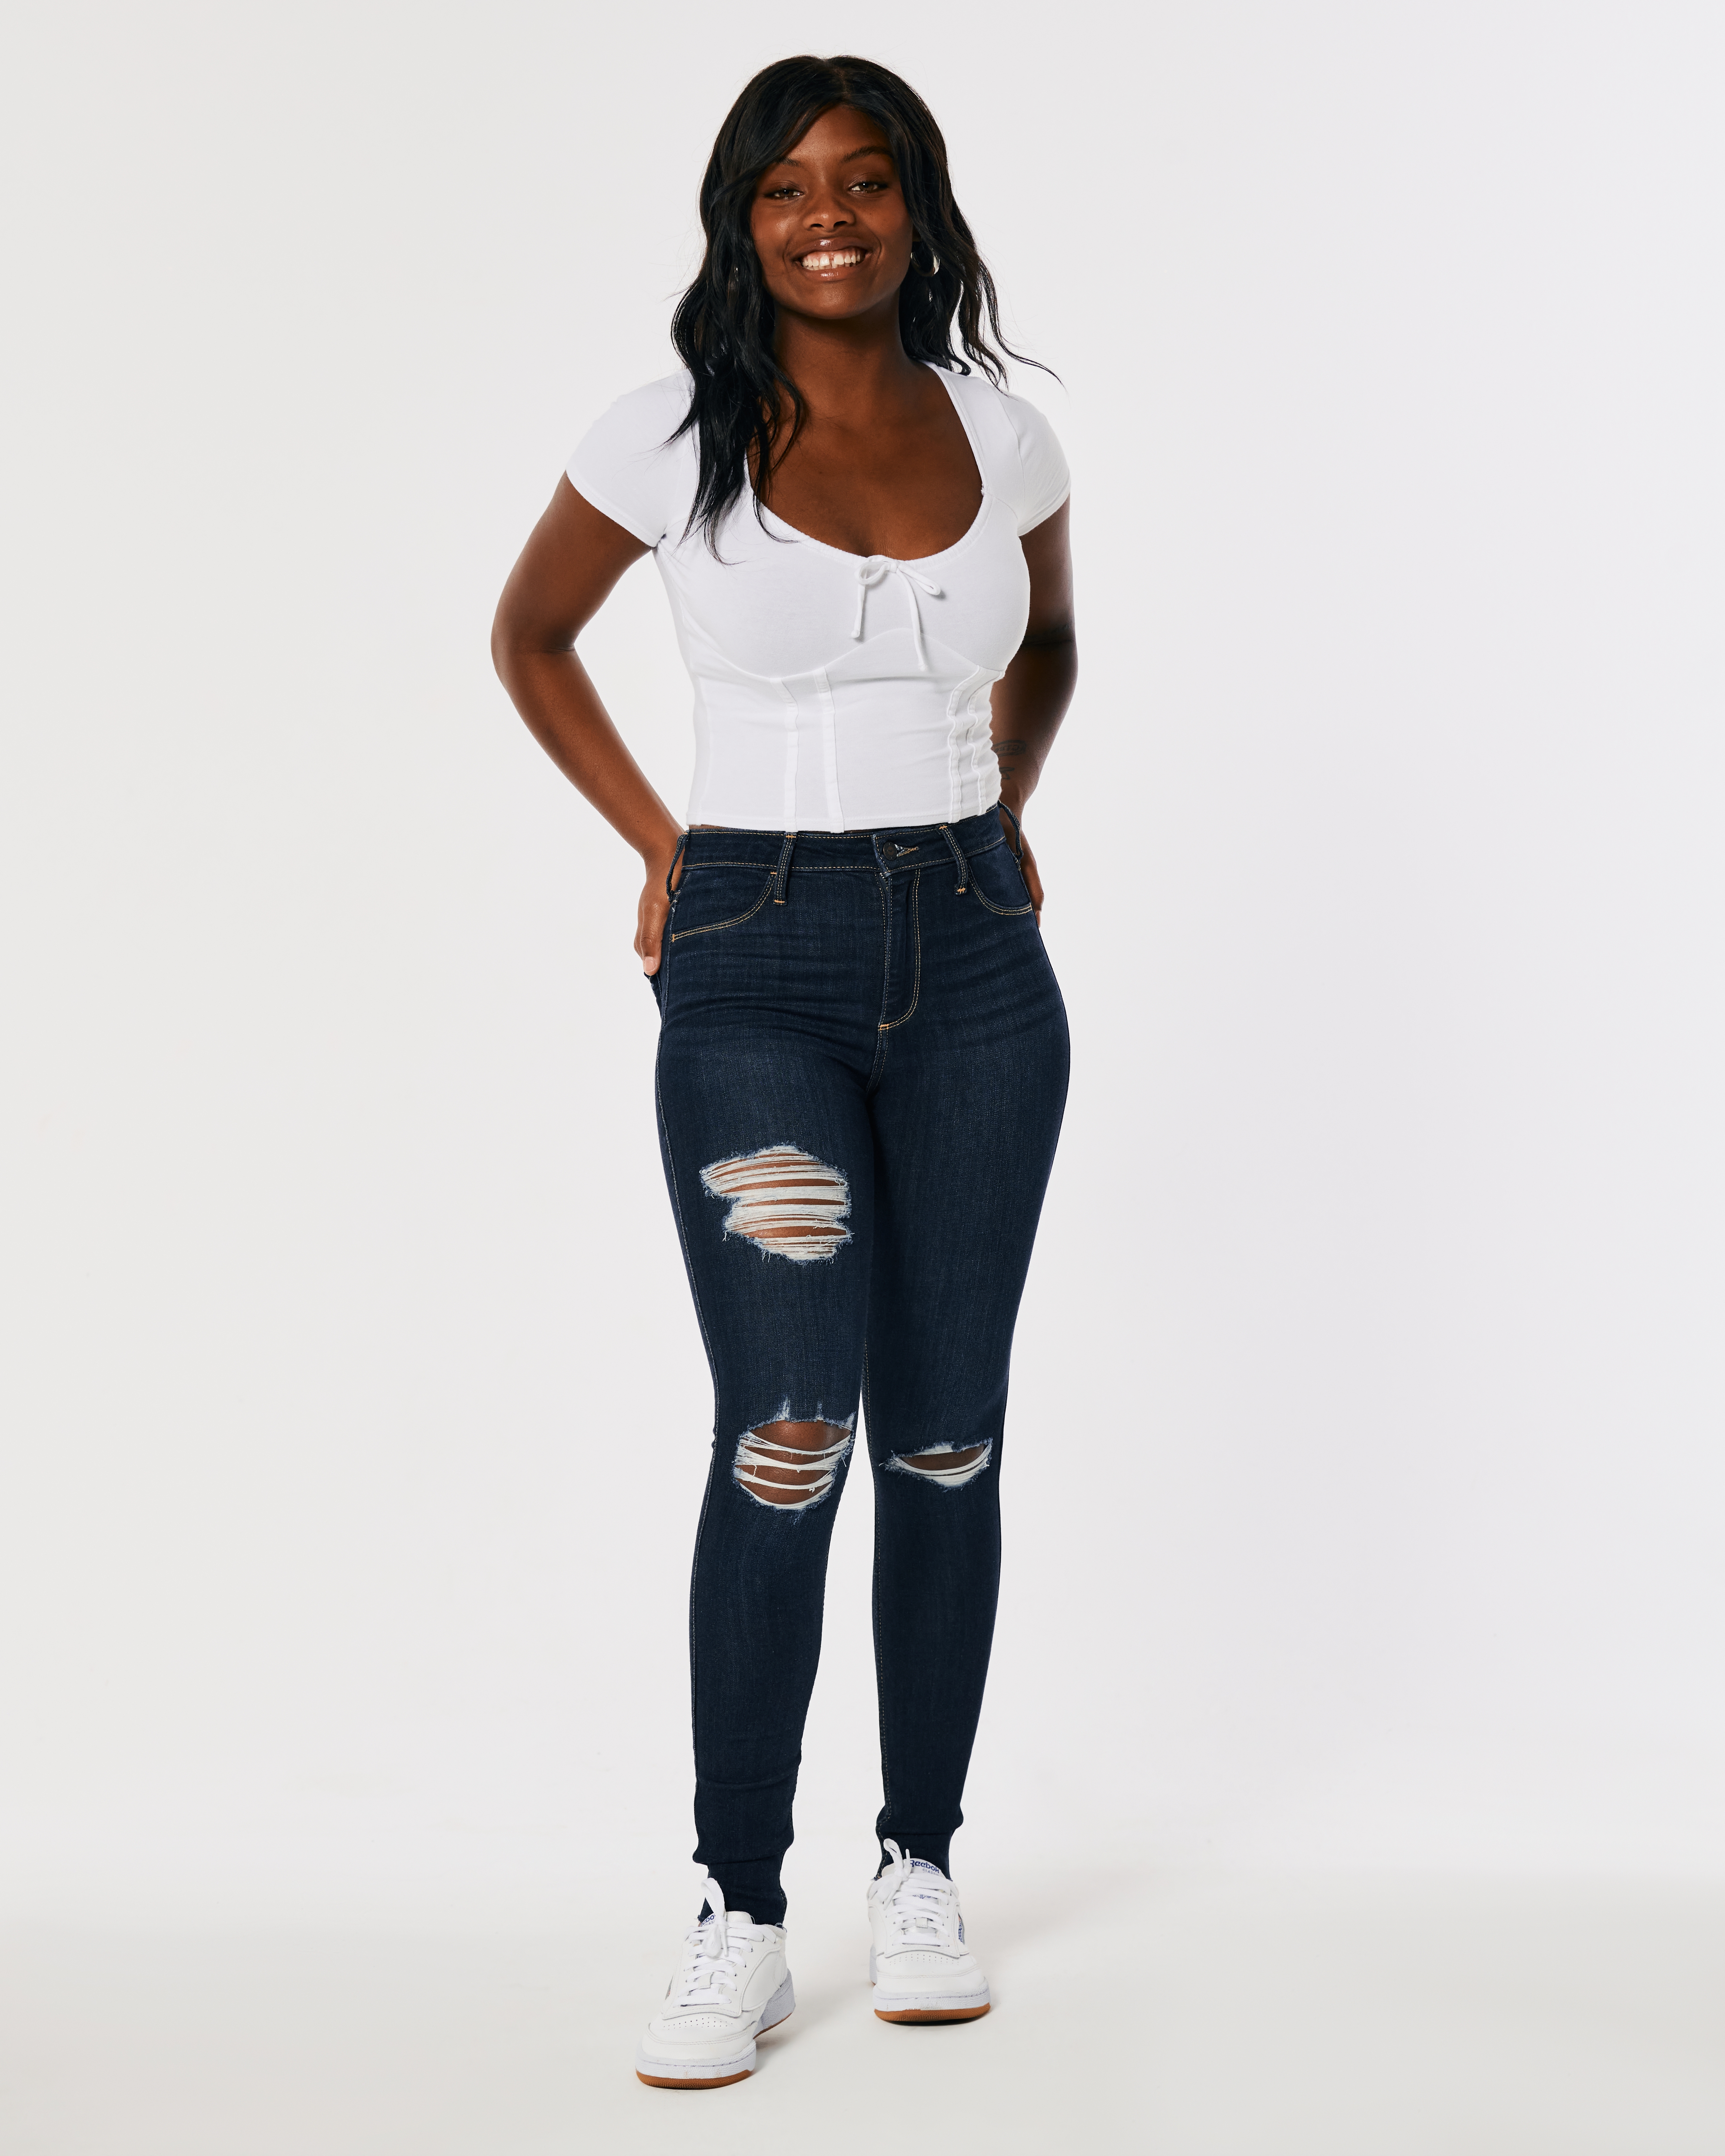 Black Girls In Tight Jeans